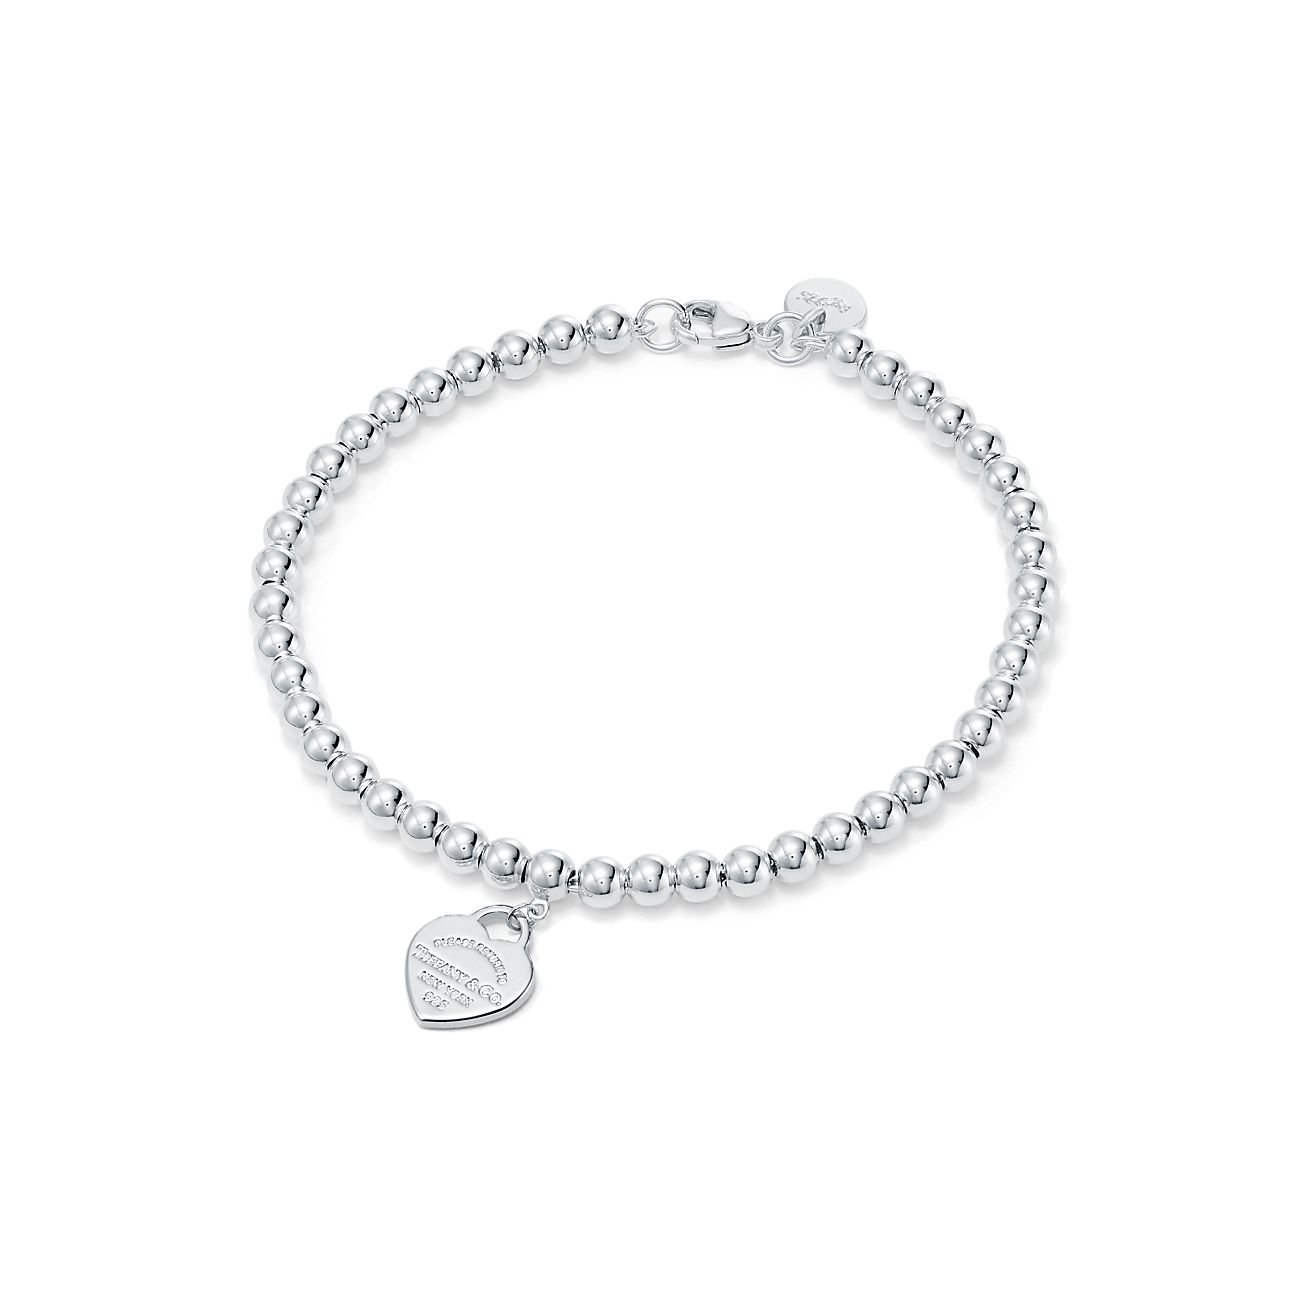 tiffany silver bead bracelet